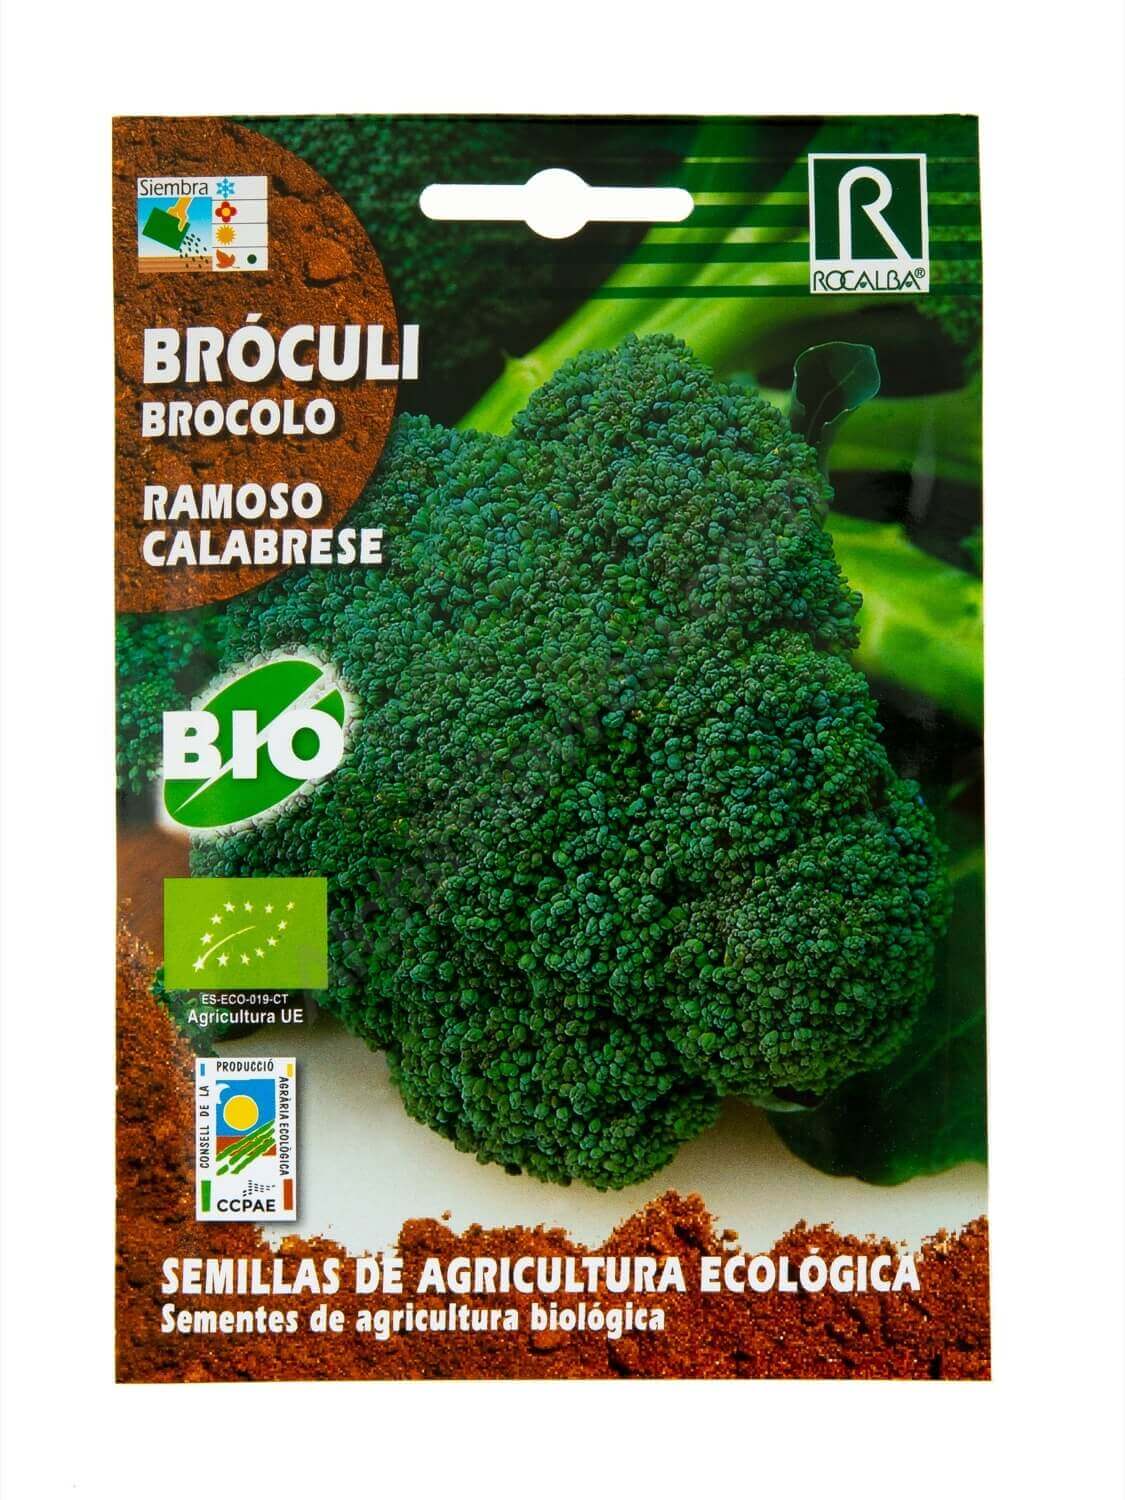 Brocoli Ramoso Calabrese bio de Rocalba